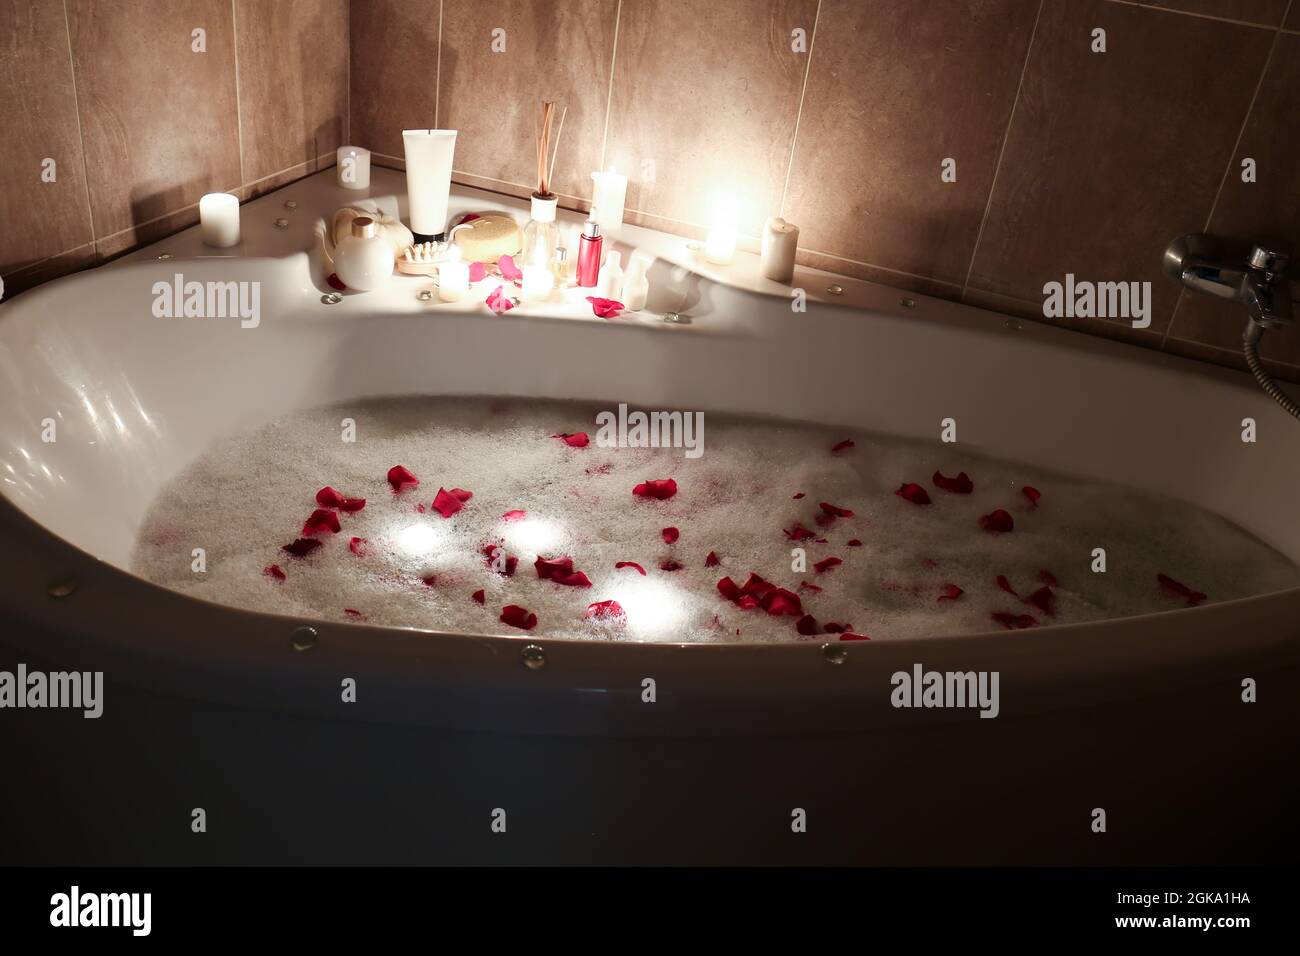 https://c8.alamy.com/comp/2GKA1HA/spa-accessories-and-candles-on-bathtub-filled-with-foam-and-rose-petals-2GKA1HA.jpg